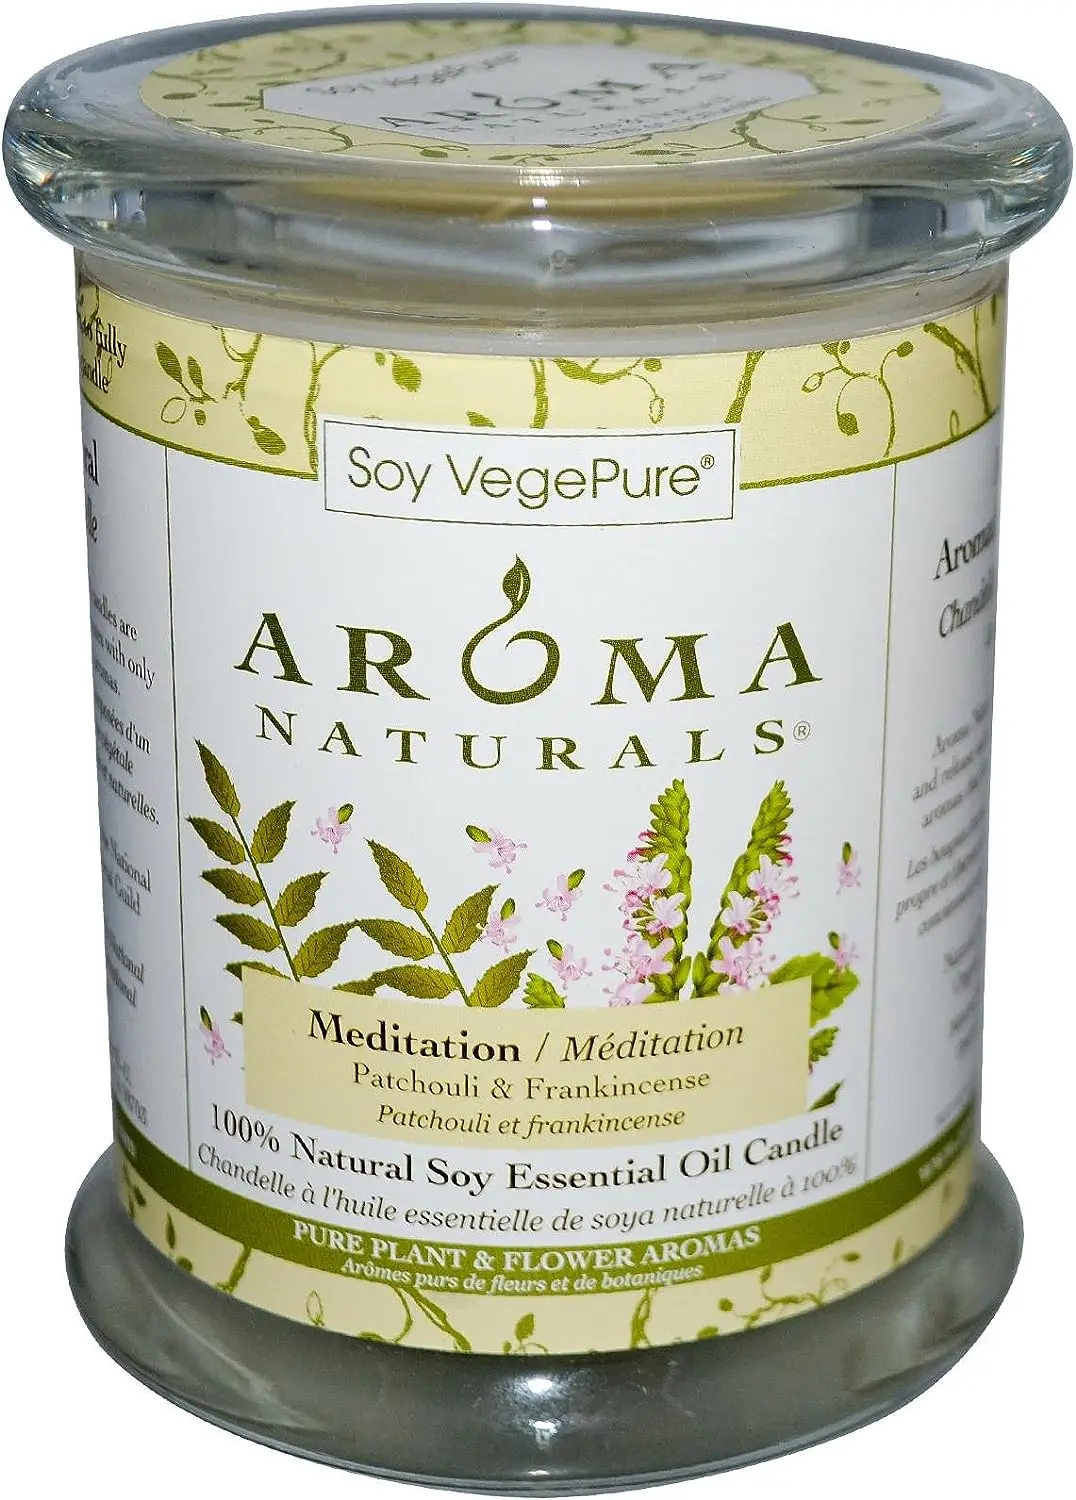 

VegePure, 100% Natural Soy Essential Oil Candle, Meditation, Patchouli & Frankincense, 8.8 oz (260 g), Aroma Naturals Led pillar